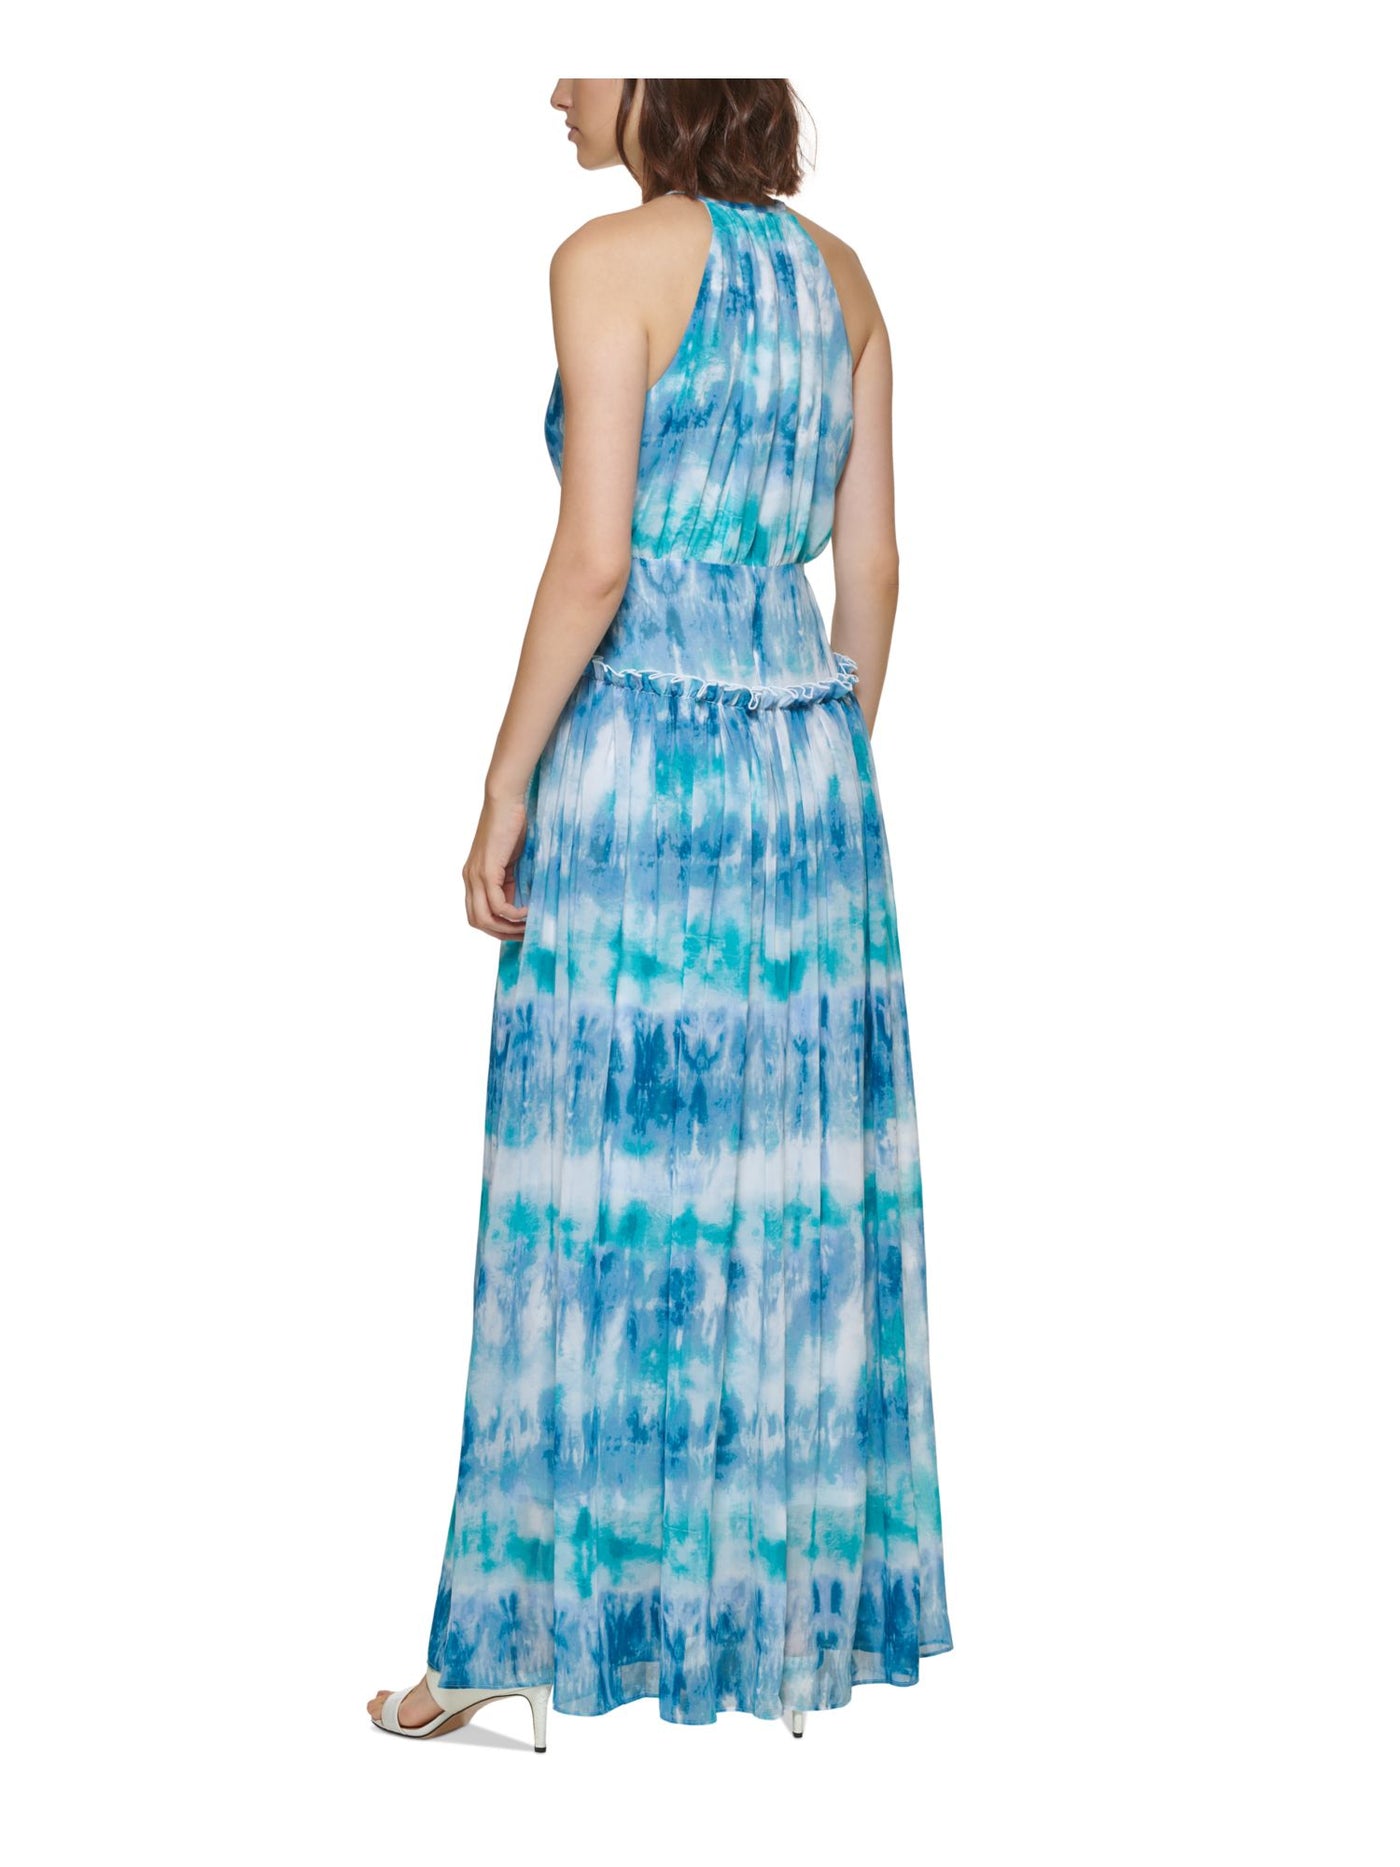 CALVIN KLEIN Womens Blue Zippered Cut Out Ruffle Trim Tie Dye Sleeveless Round Neck Full-Length Formal Gown Dress 6